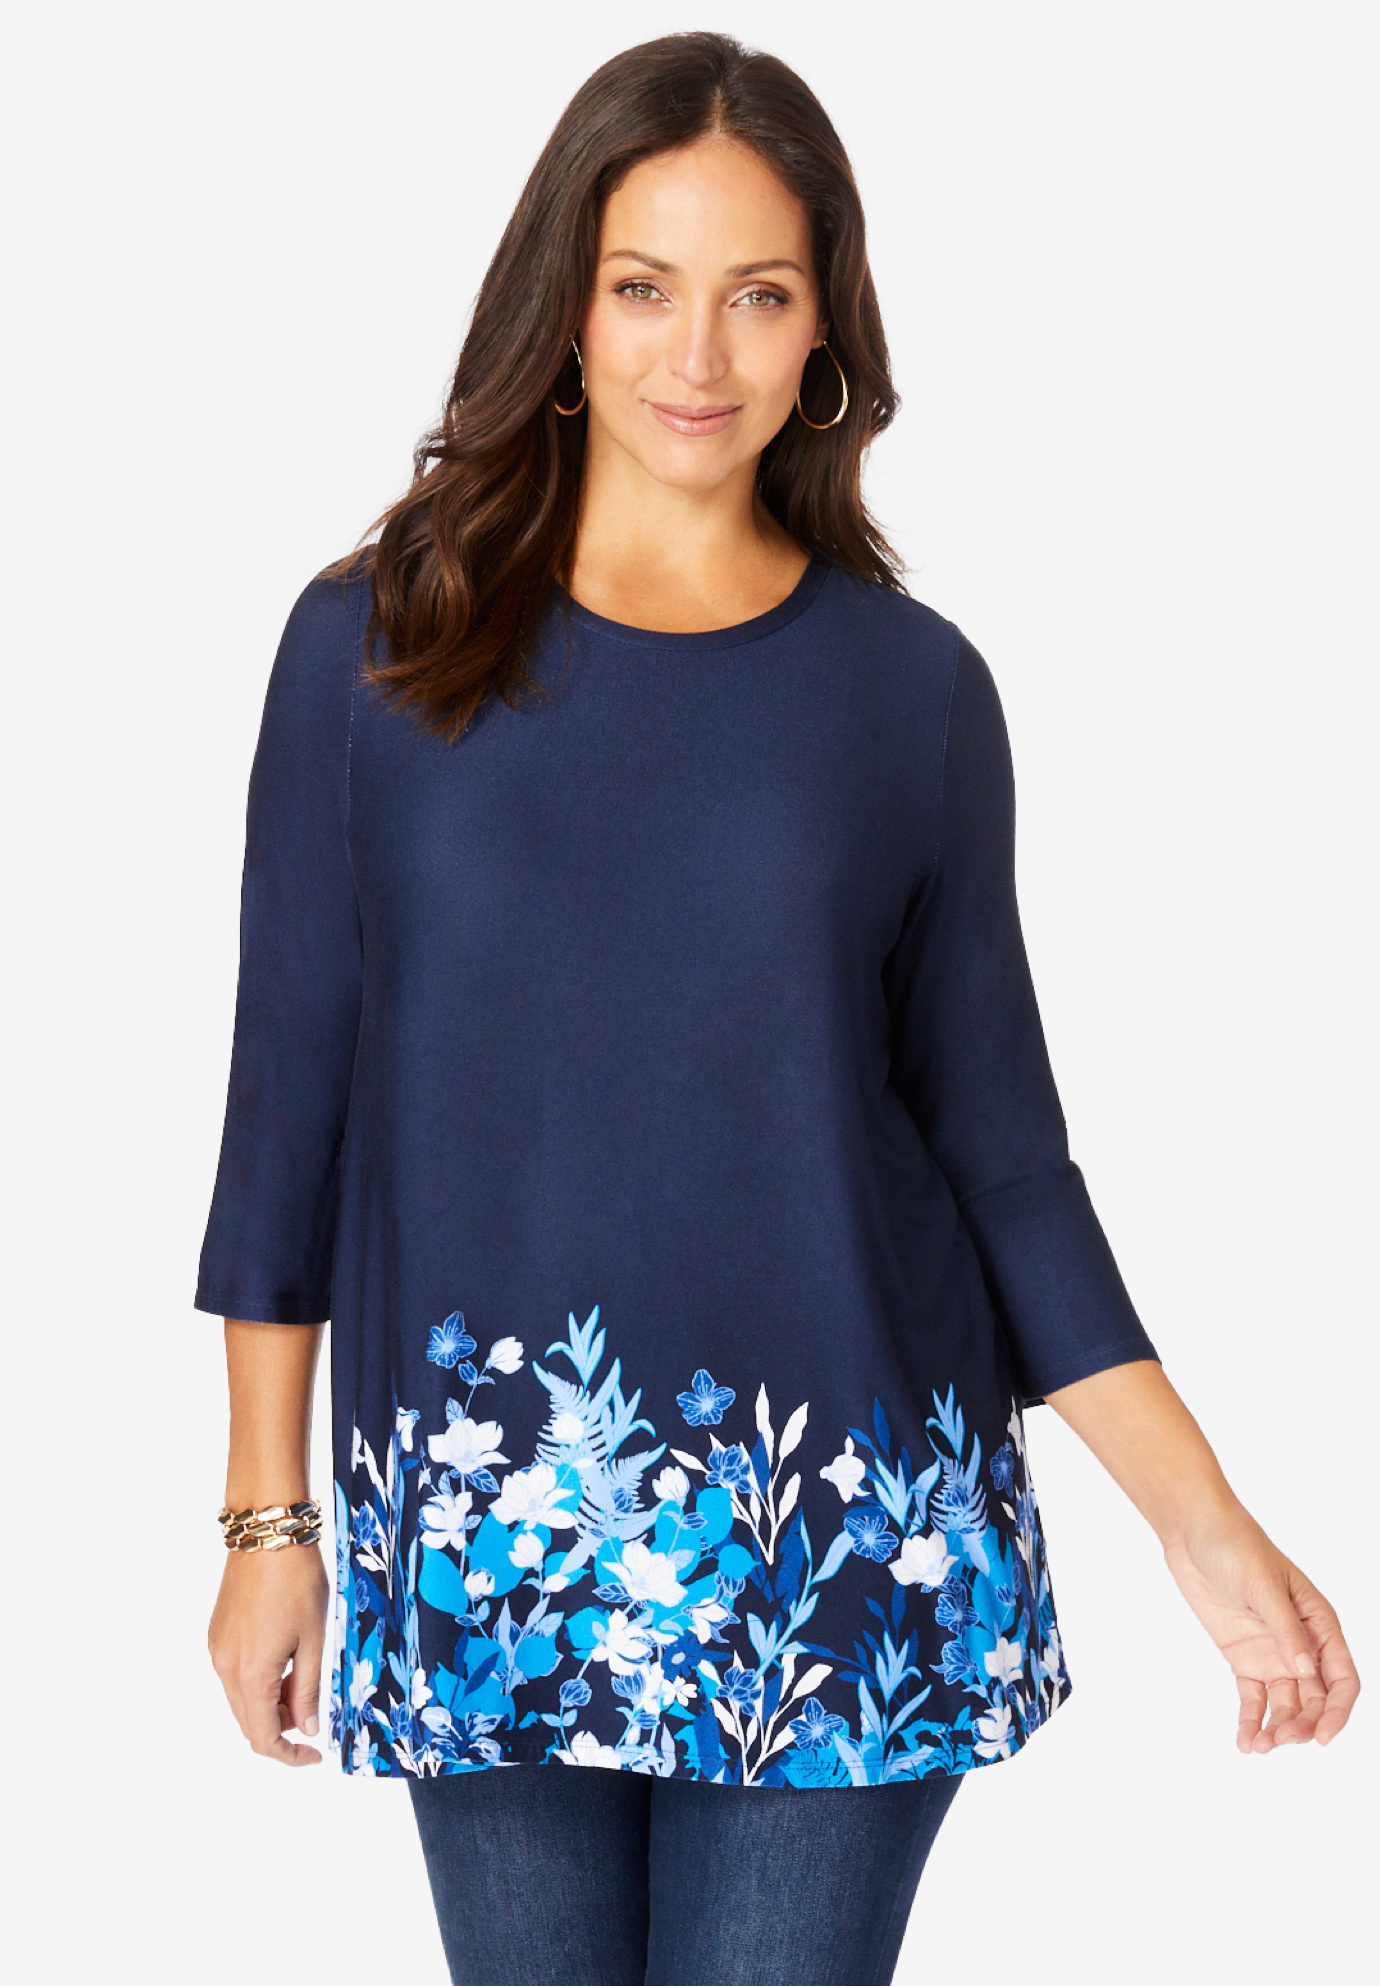 Jessica London Women's Plus Size Knit Tunic Tank Long Sleeveless Blouse -  12, Aqua Sea Blue at  Women's Clothing store